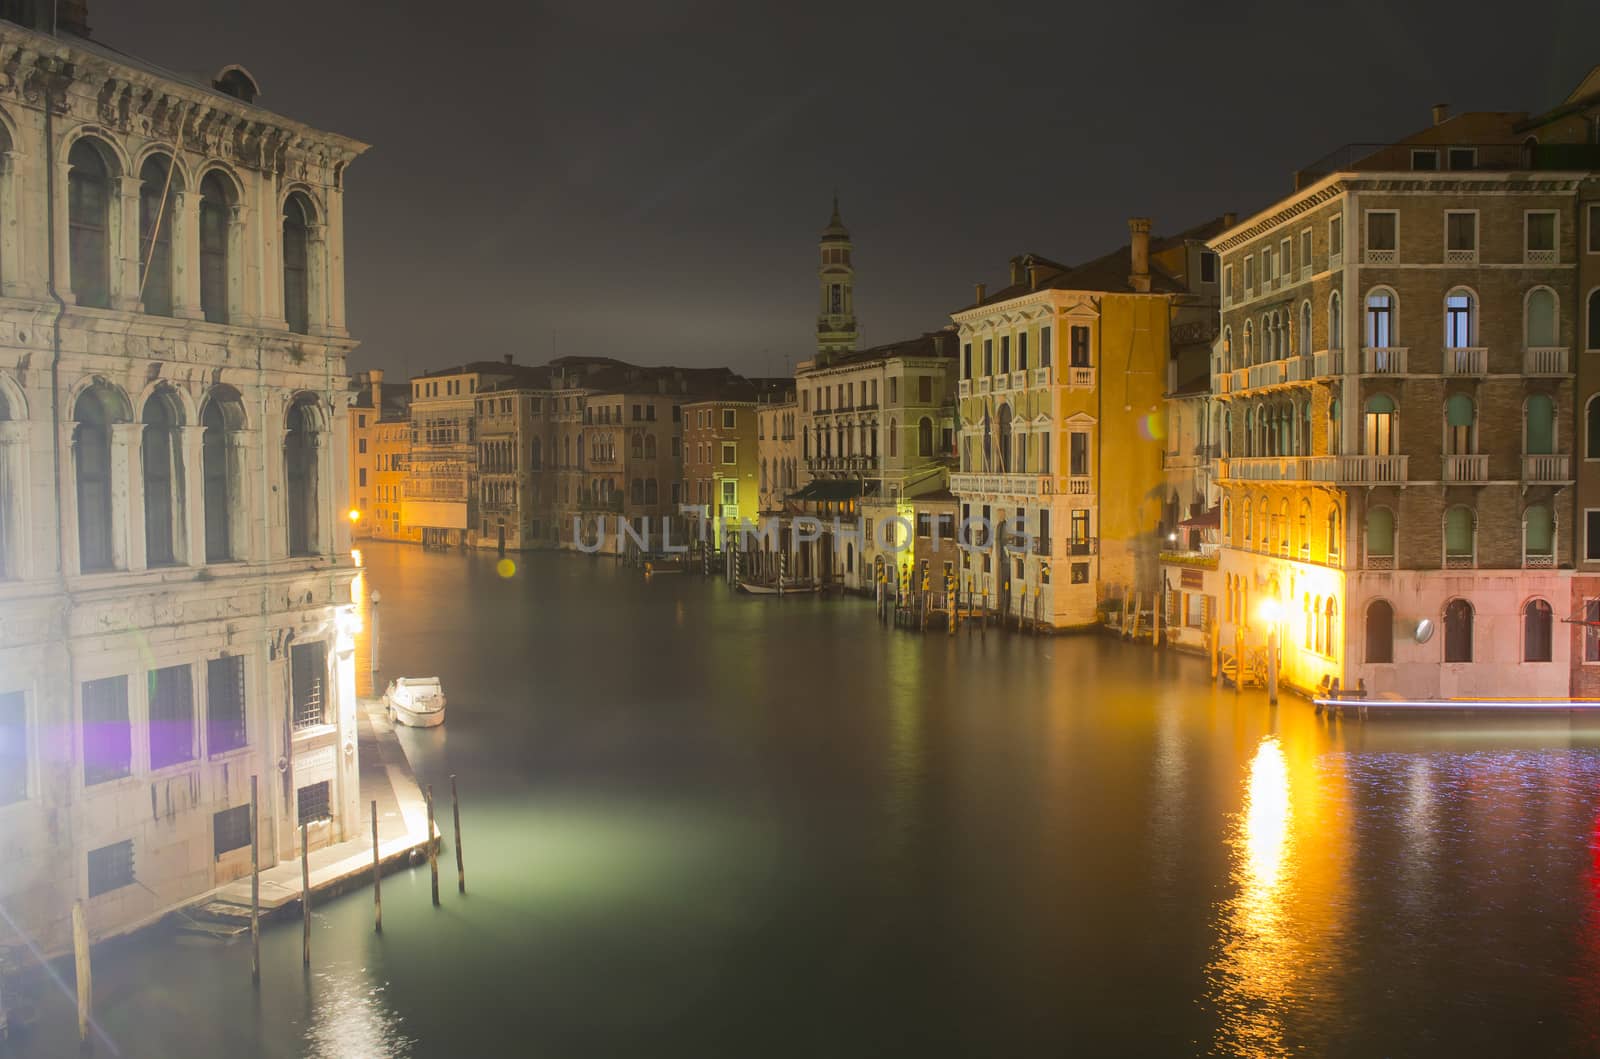 Venice, Night Reflection